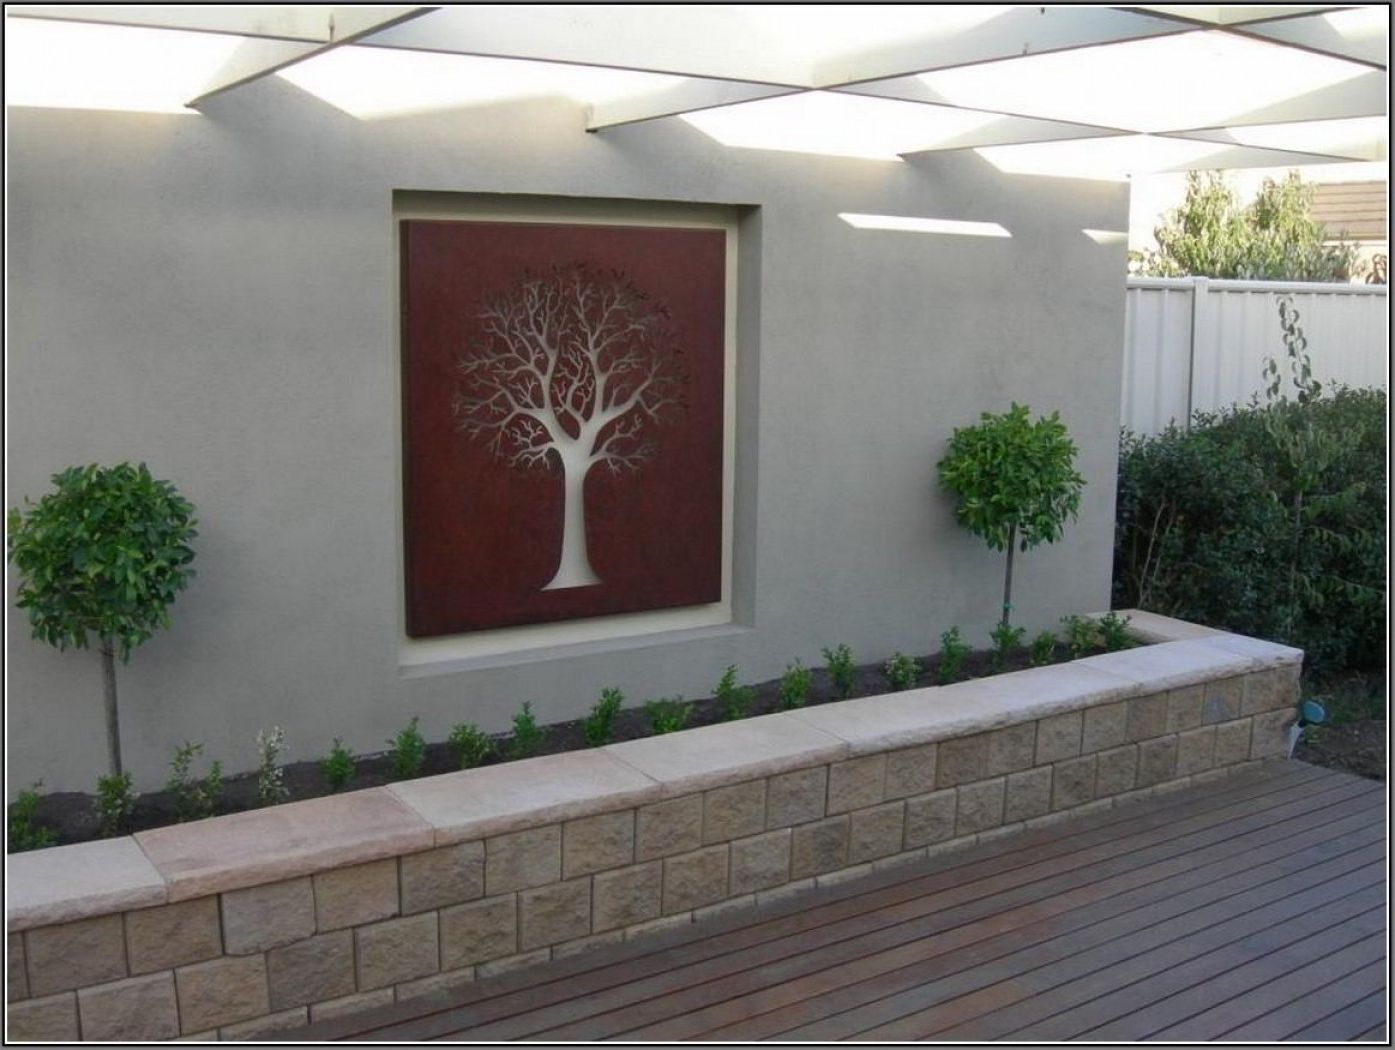 Outdoor Garden Wall Decor Imaginisca Decoration Ideas For Good Large Regarding Popular Garden Wall Art (View 3 of 15)